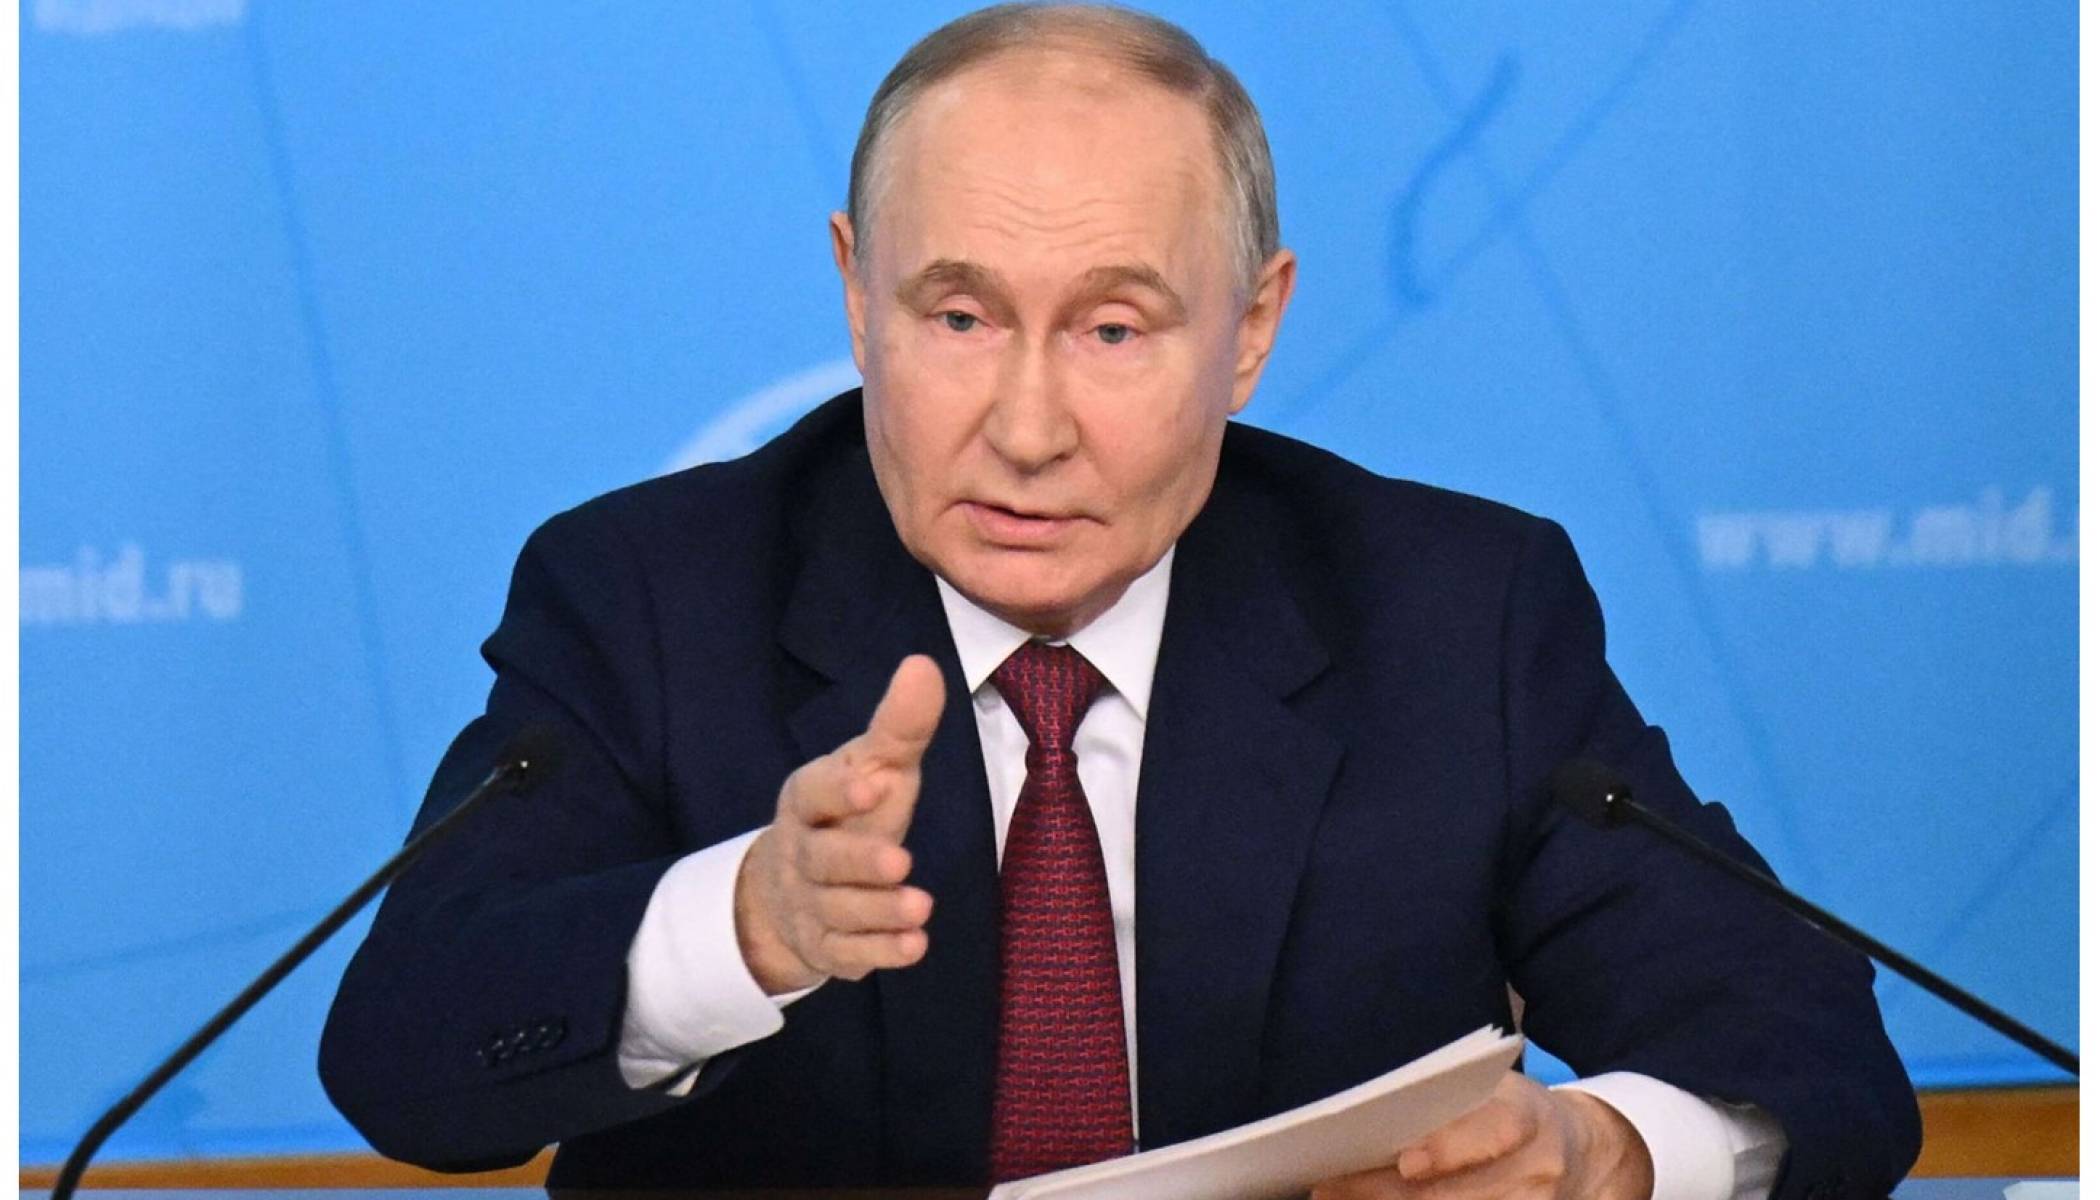 Putin presents initiative to 